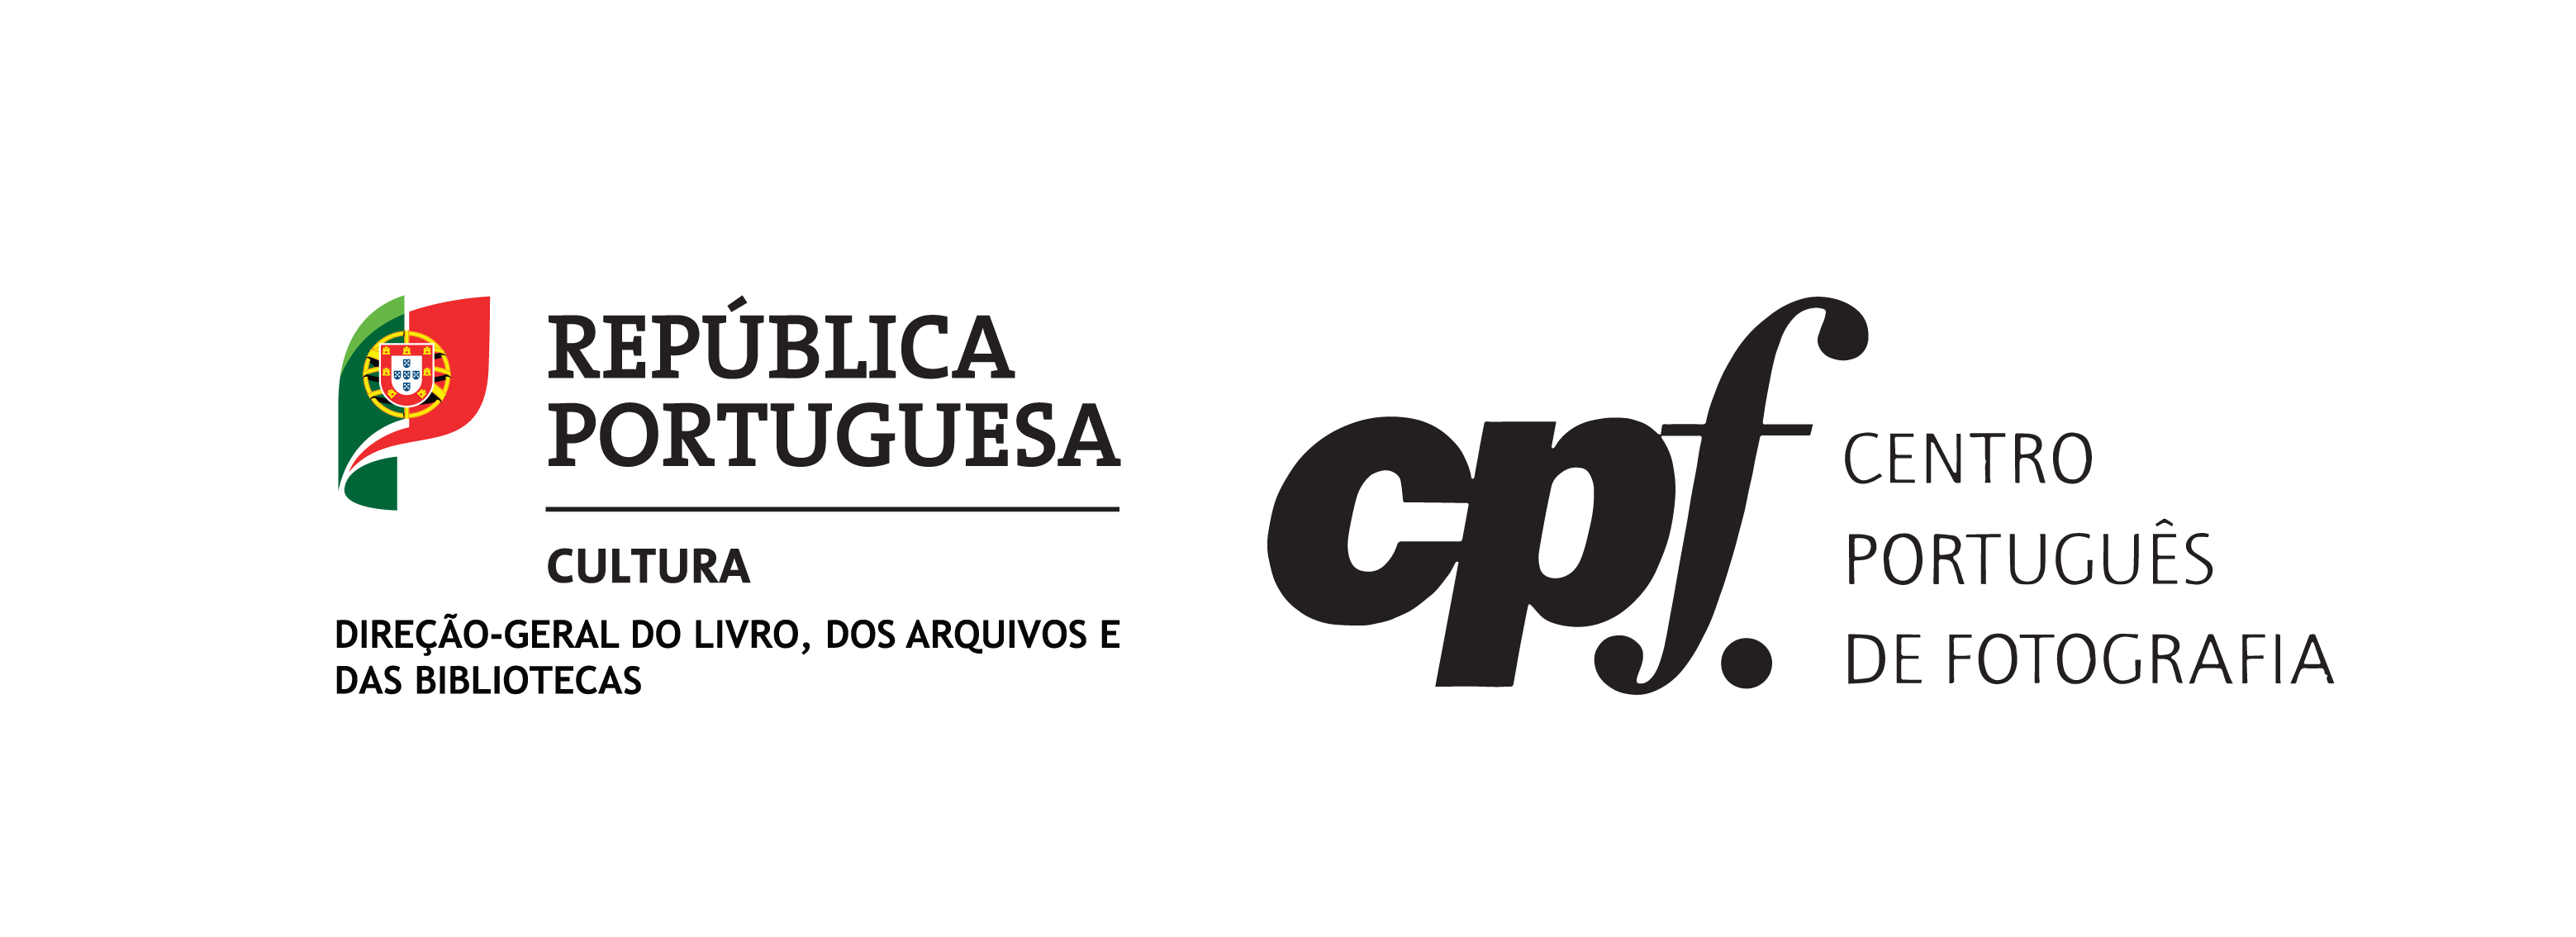 Centro Português de Fotografia (Oporto)